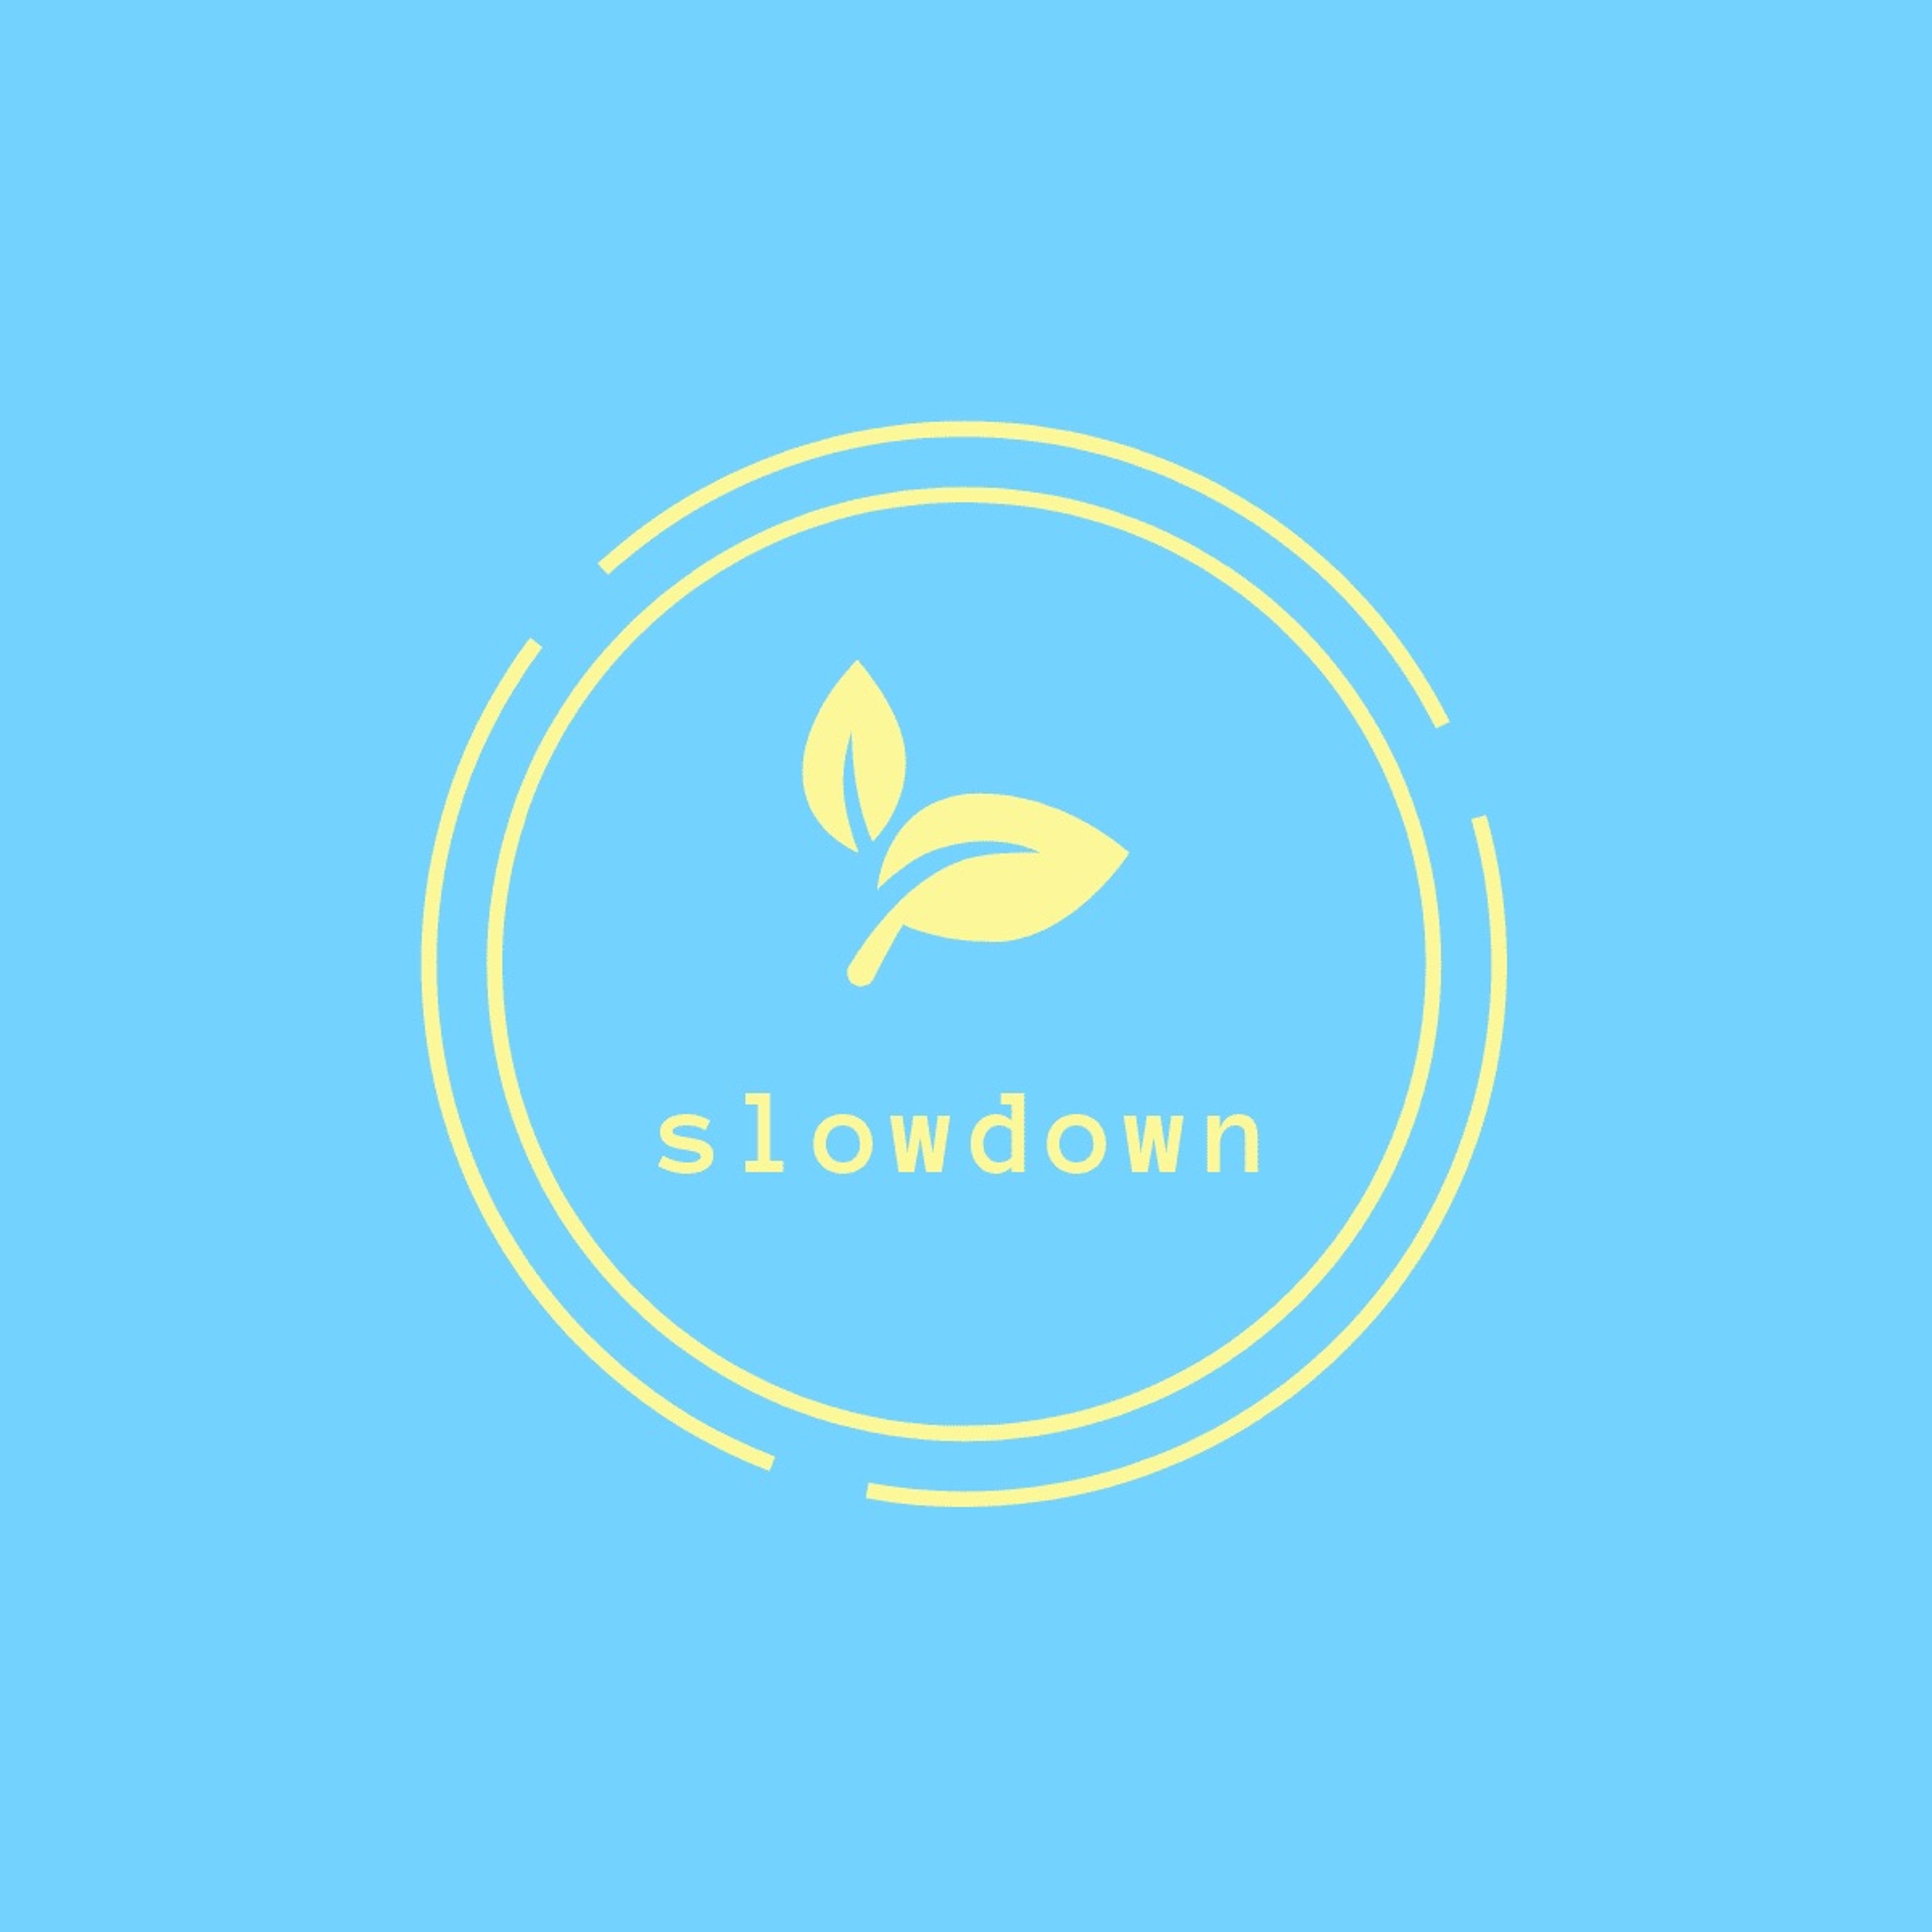 slowdown 6